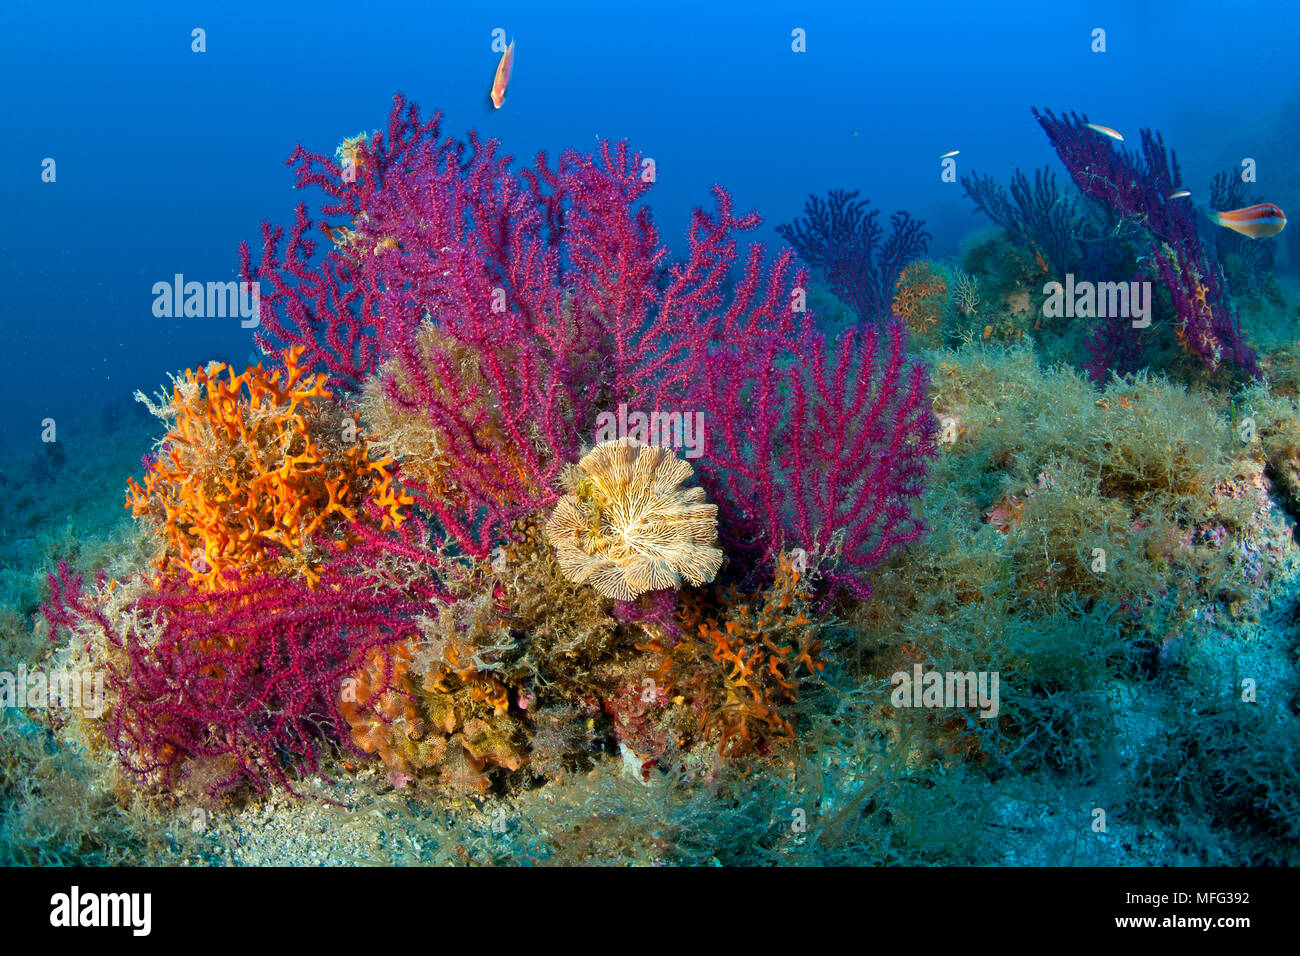 Seafan, Red Gorgonian, Paramuricea clavata with bryozoan, Sertella septentrionalis and bryozoan Pentapora fascialis, Marine Protected area Punta Campa Stock Photo